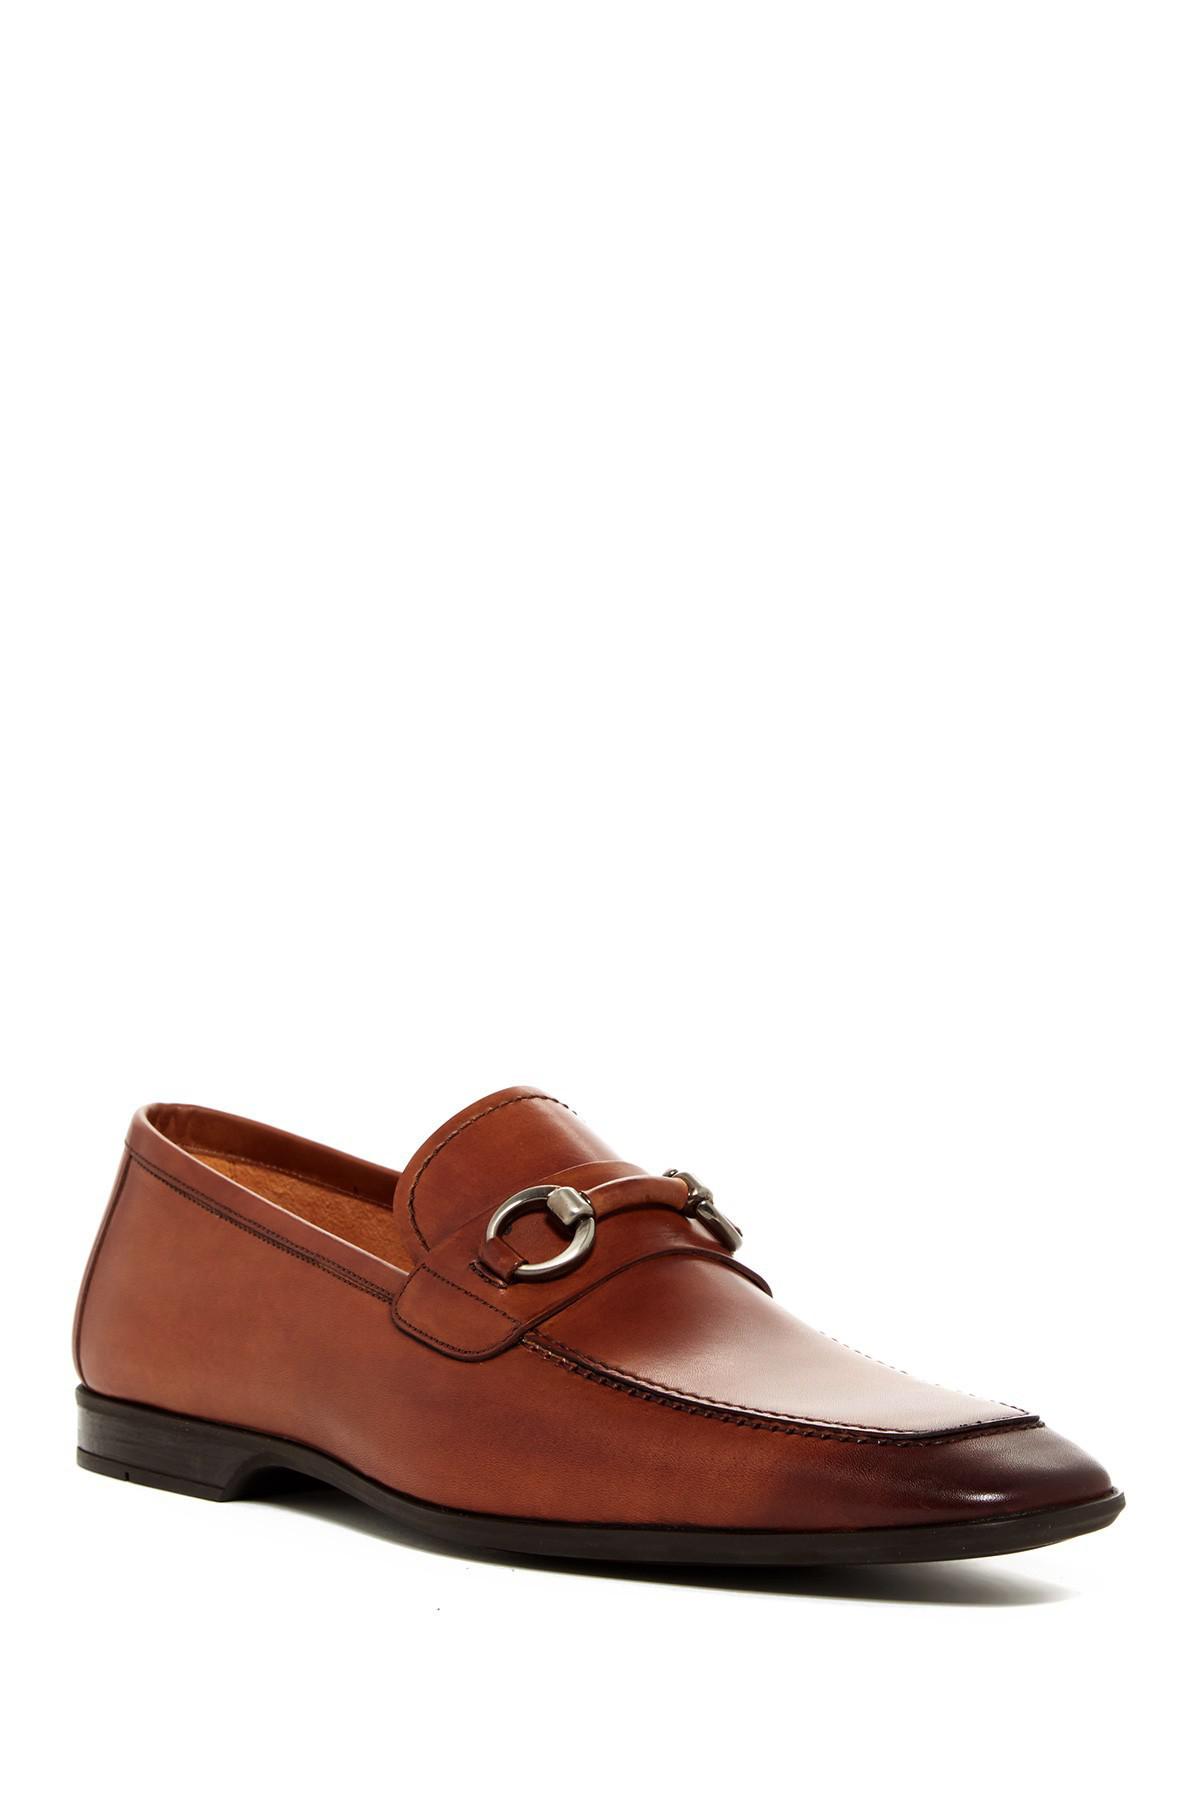 Magnanni Leather Voto Slip-on Loafer in Cognac (Brown) for Men - Lyst